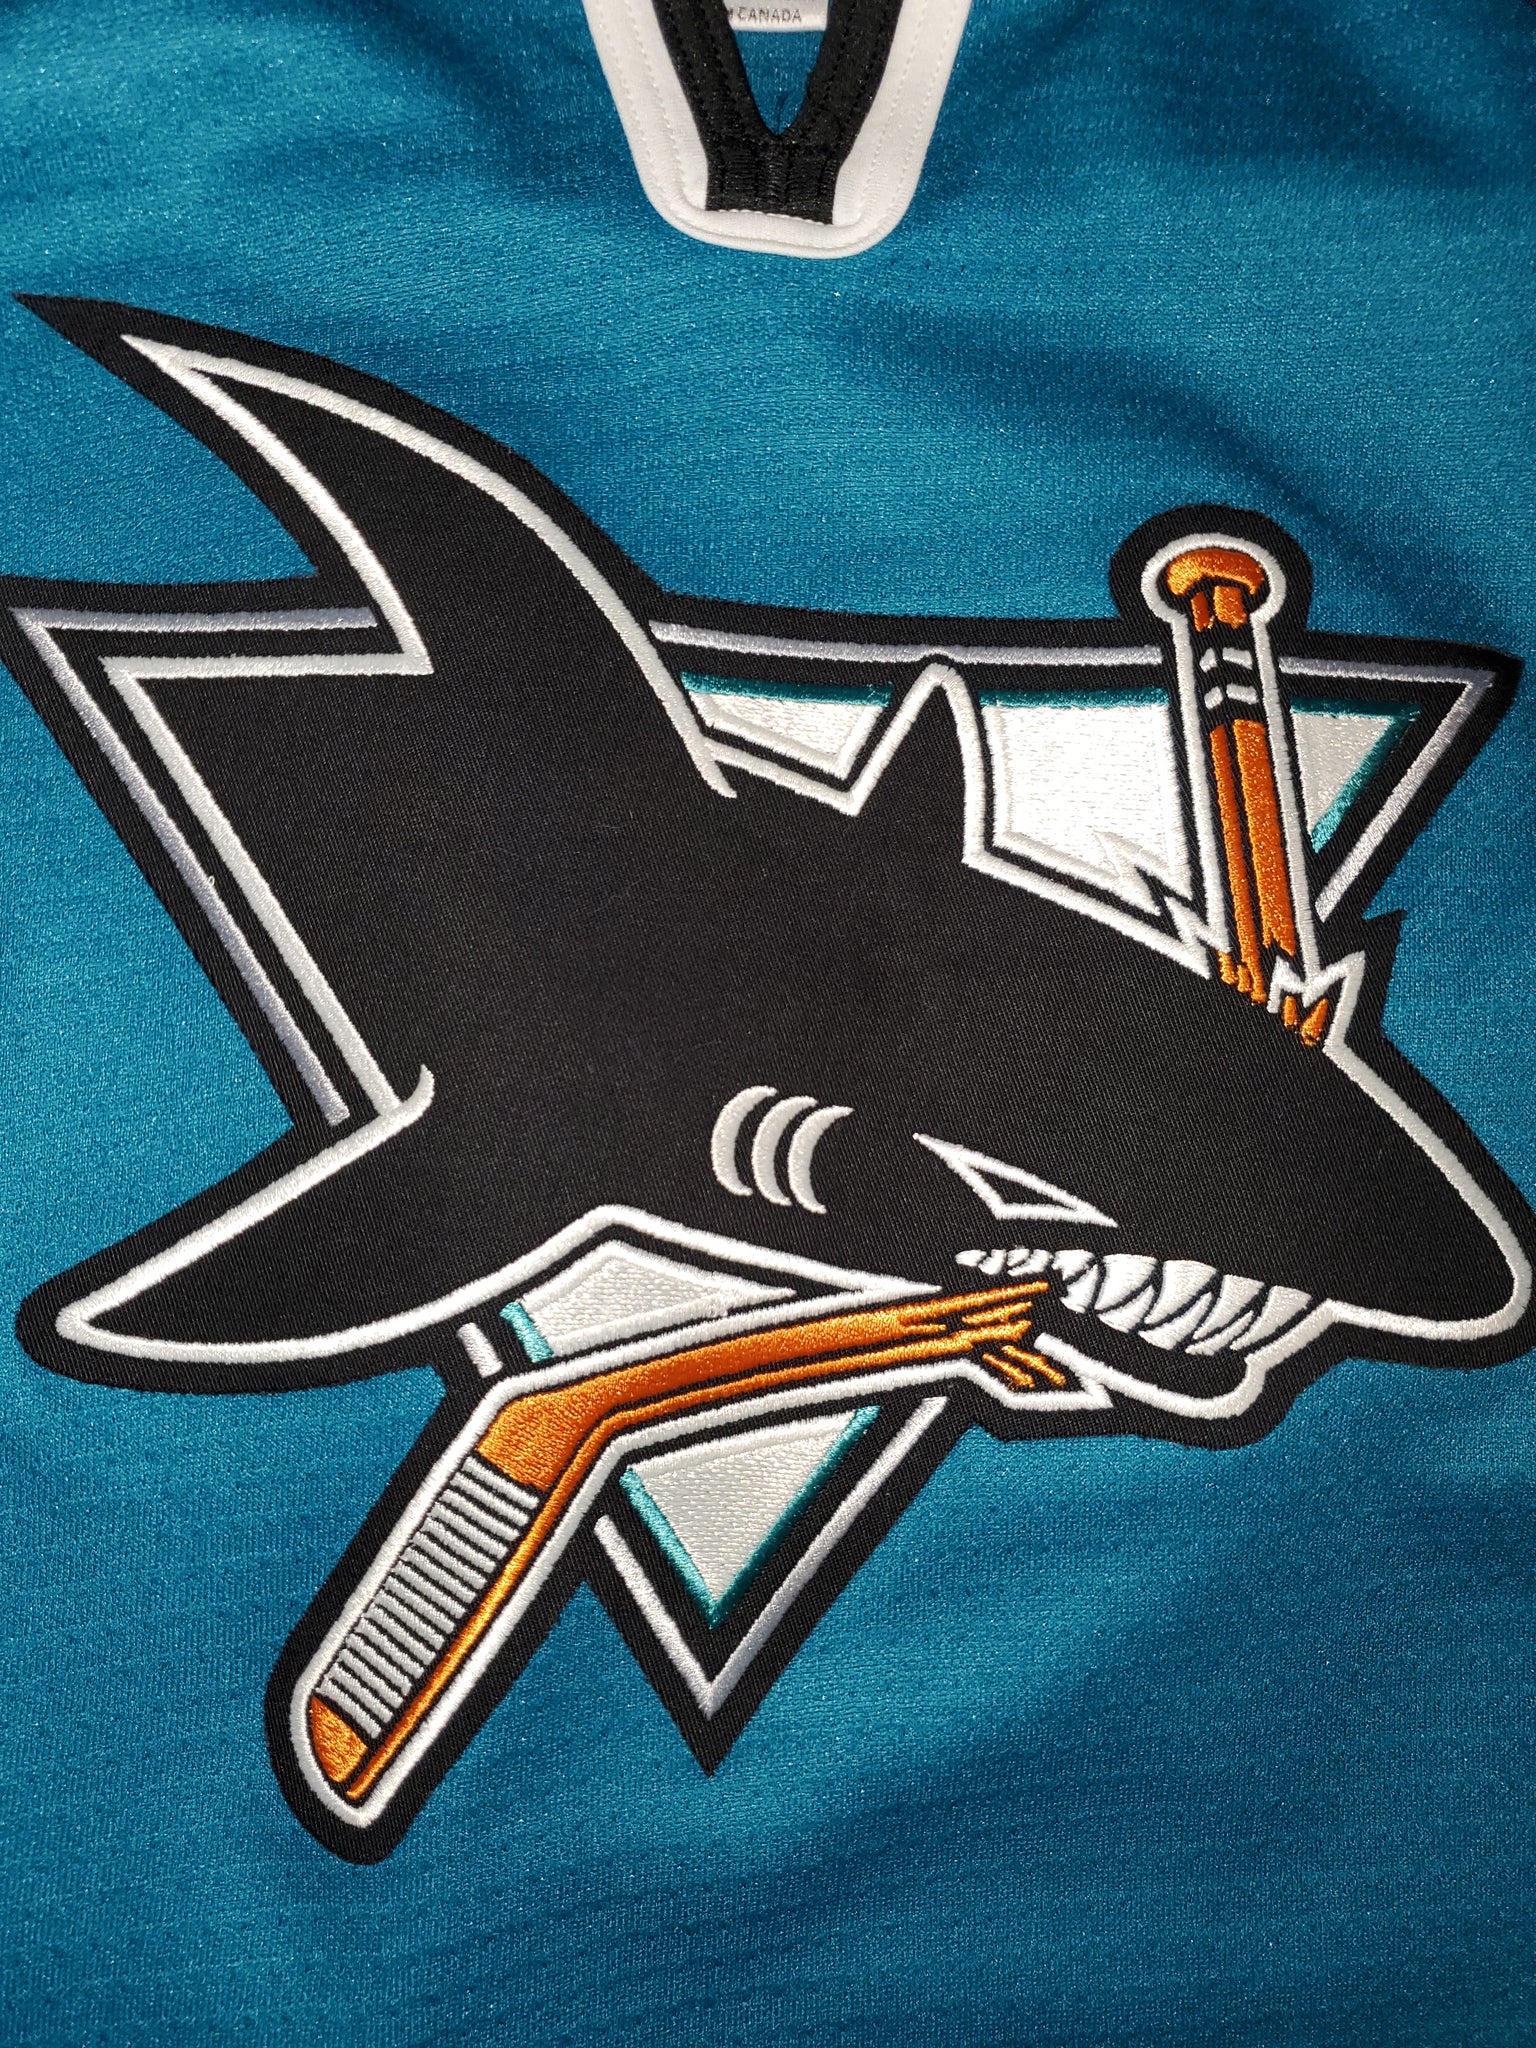 San Jose Sharks Reebok Hockey Jersey, Size XXL – Stuck In The 90s Sports